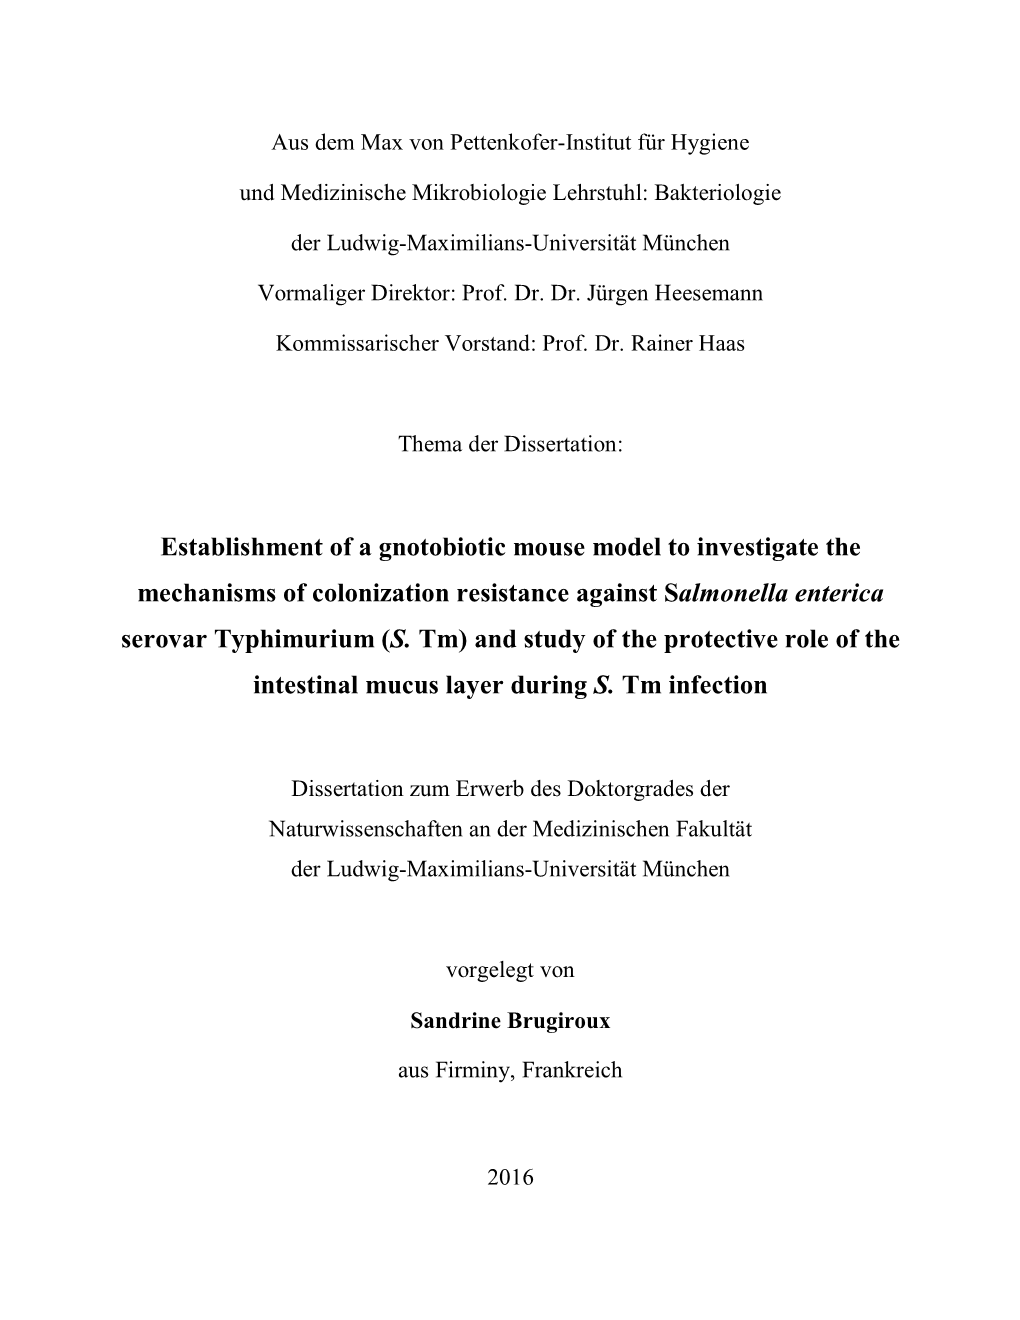 Establishment of a Gnotobiotic Mouse Model to Investigate the Mechanisms of Colonization Resistance Against Salmonella Enterica Serovar Typhimurium (S